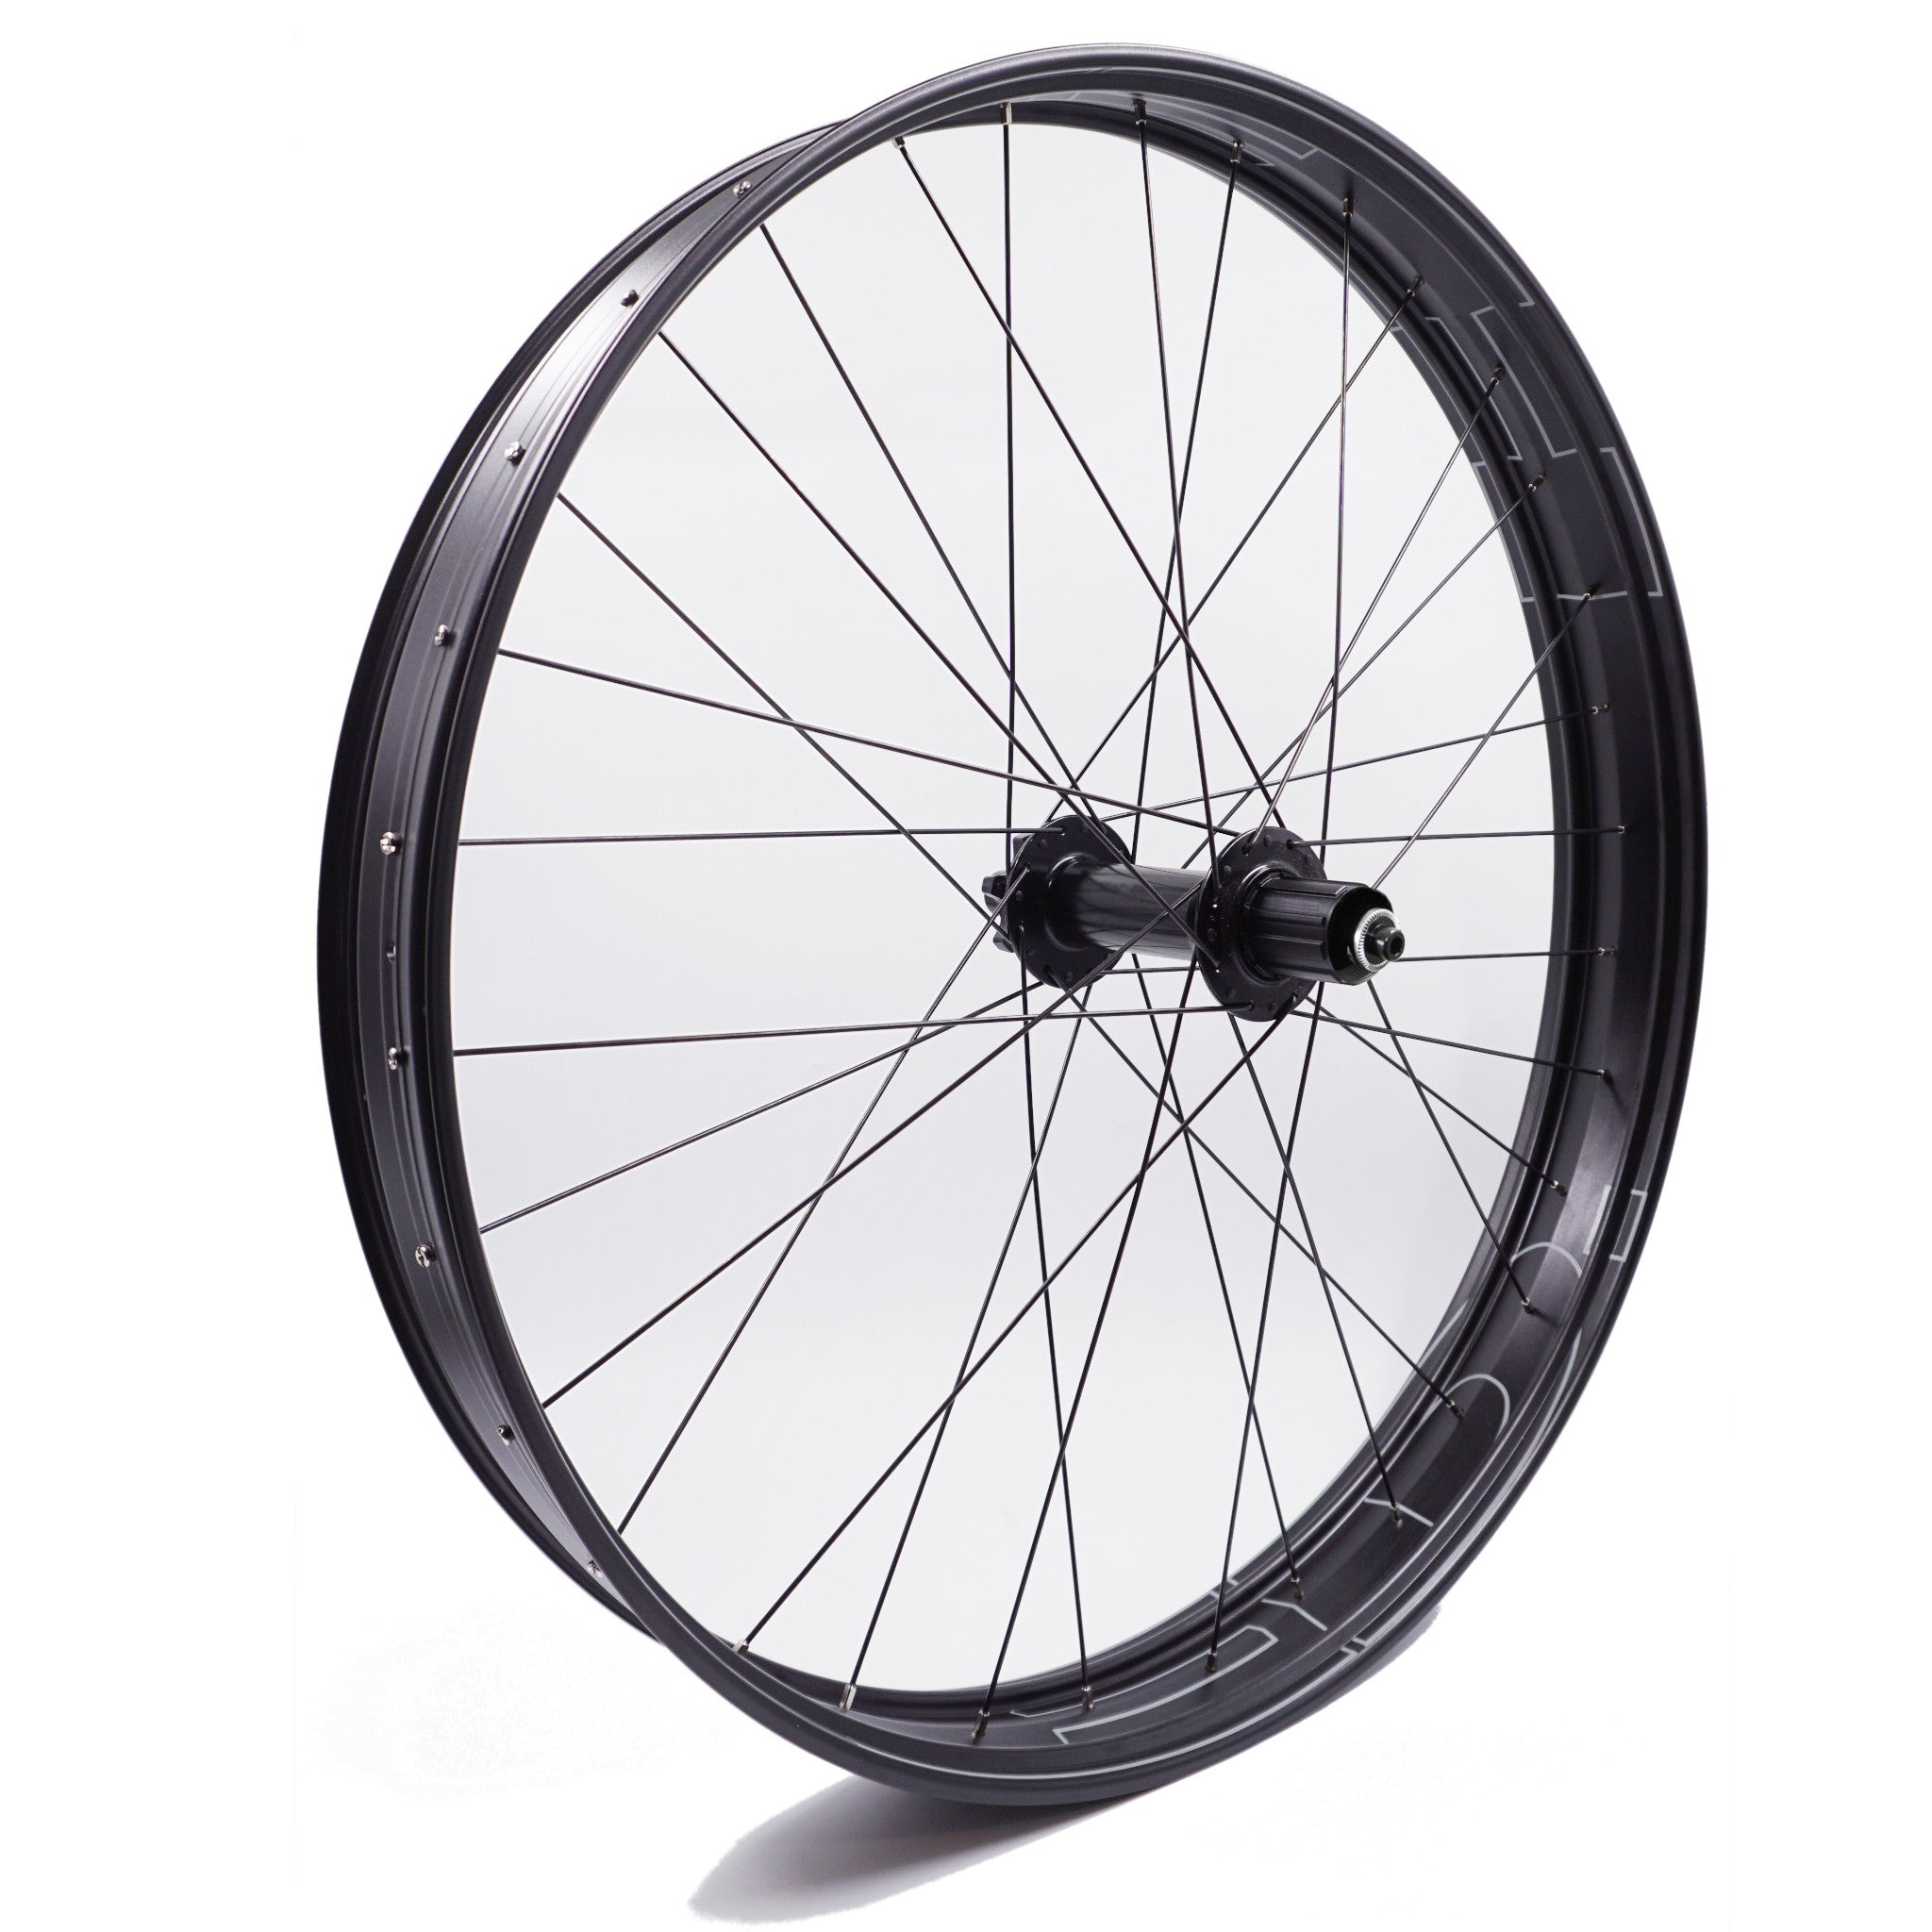 HED Big Aluminum Half Deal 27.5-inch 190mm QR Rear Fat Bike Wheel - The Bikesmiths